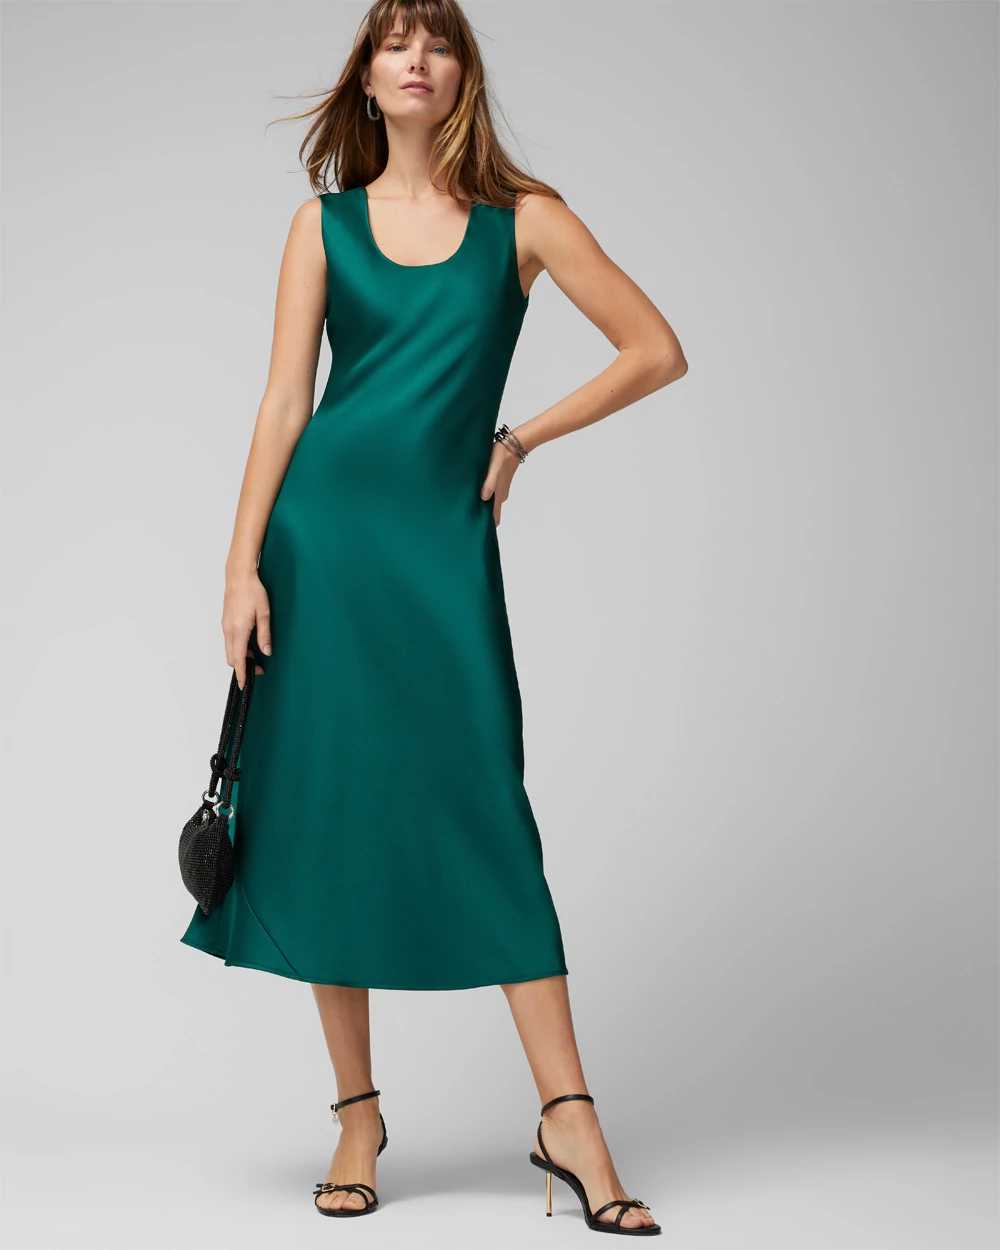 Sleeveless Satin Slip Dress click to view larger image.